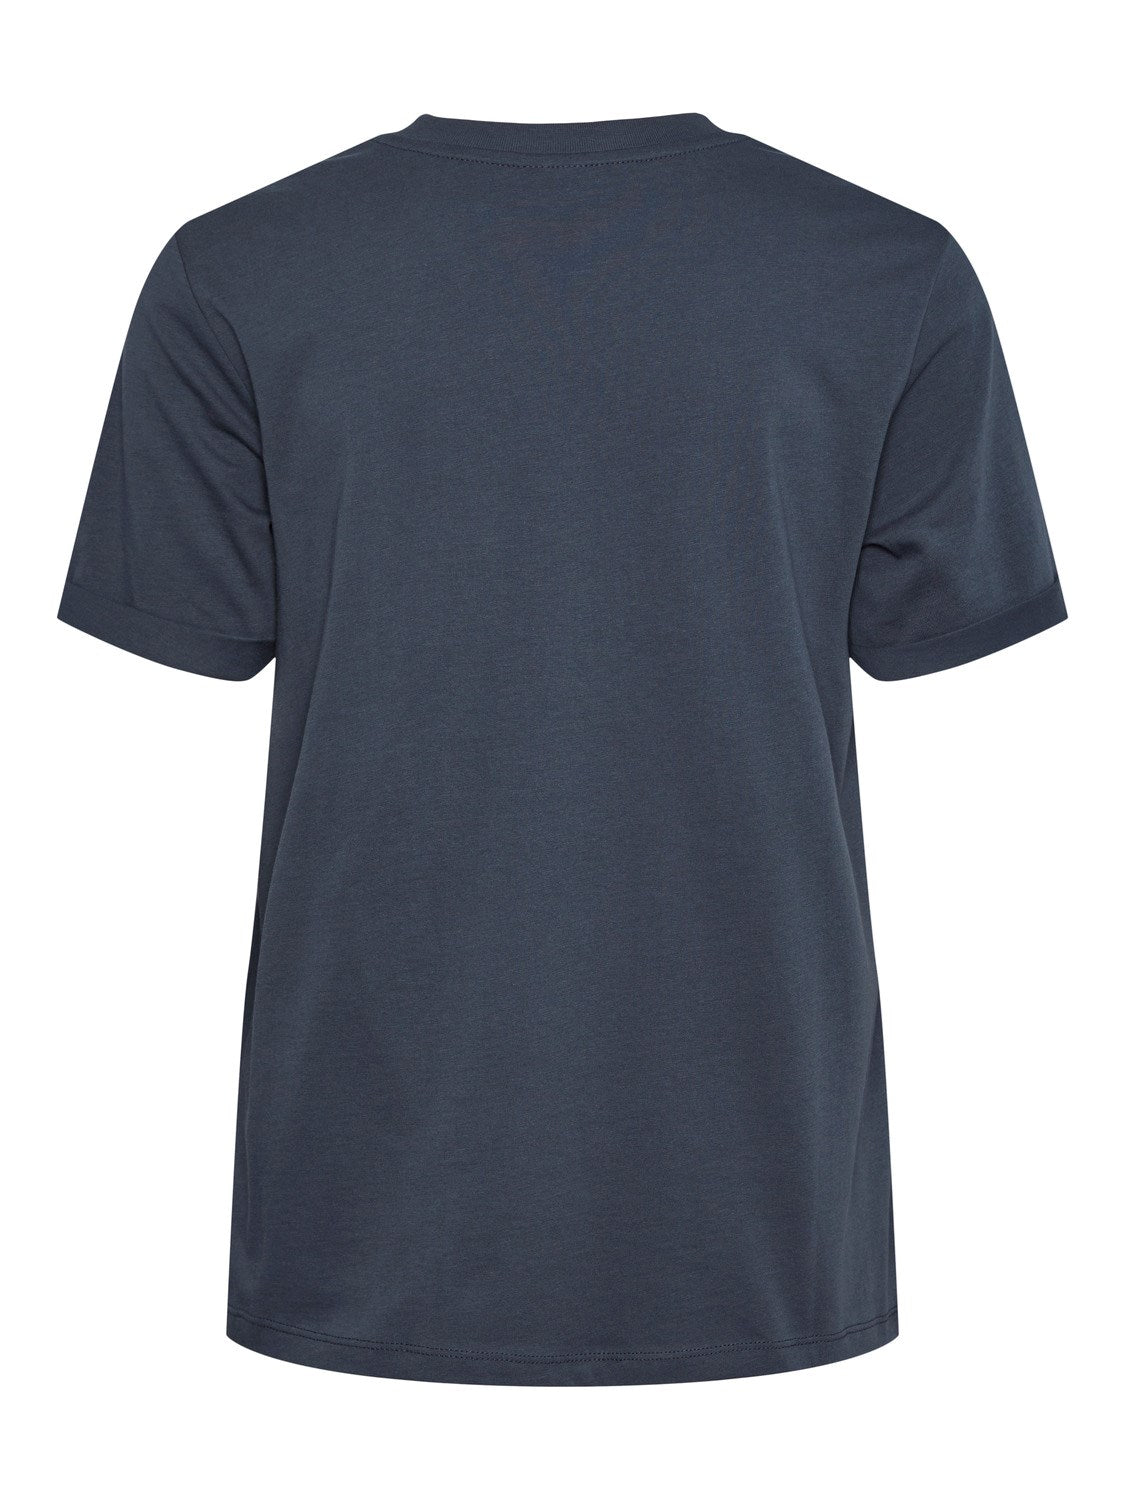 
                  
                    PCRIA Ombre Blue T-Shirt
                  
                